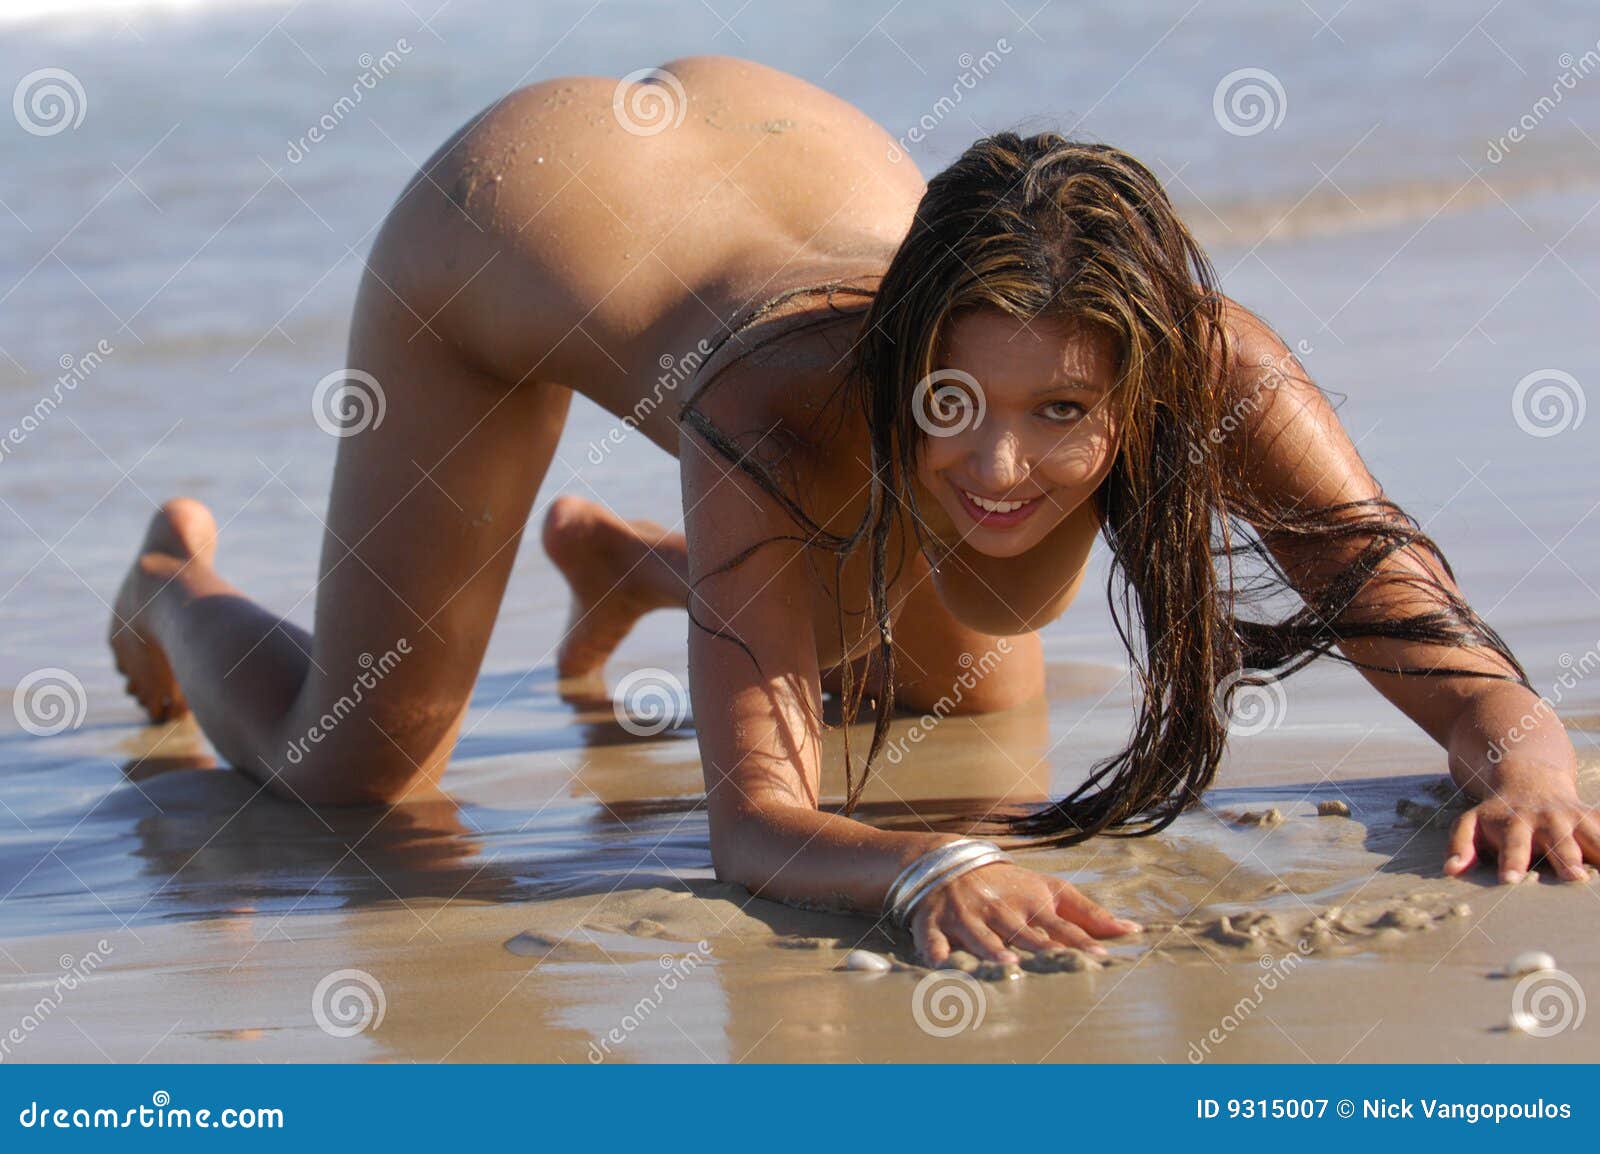 Nude beach girls